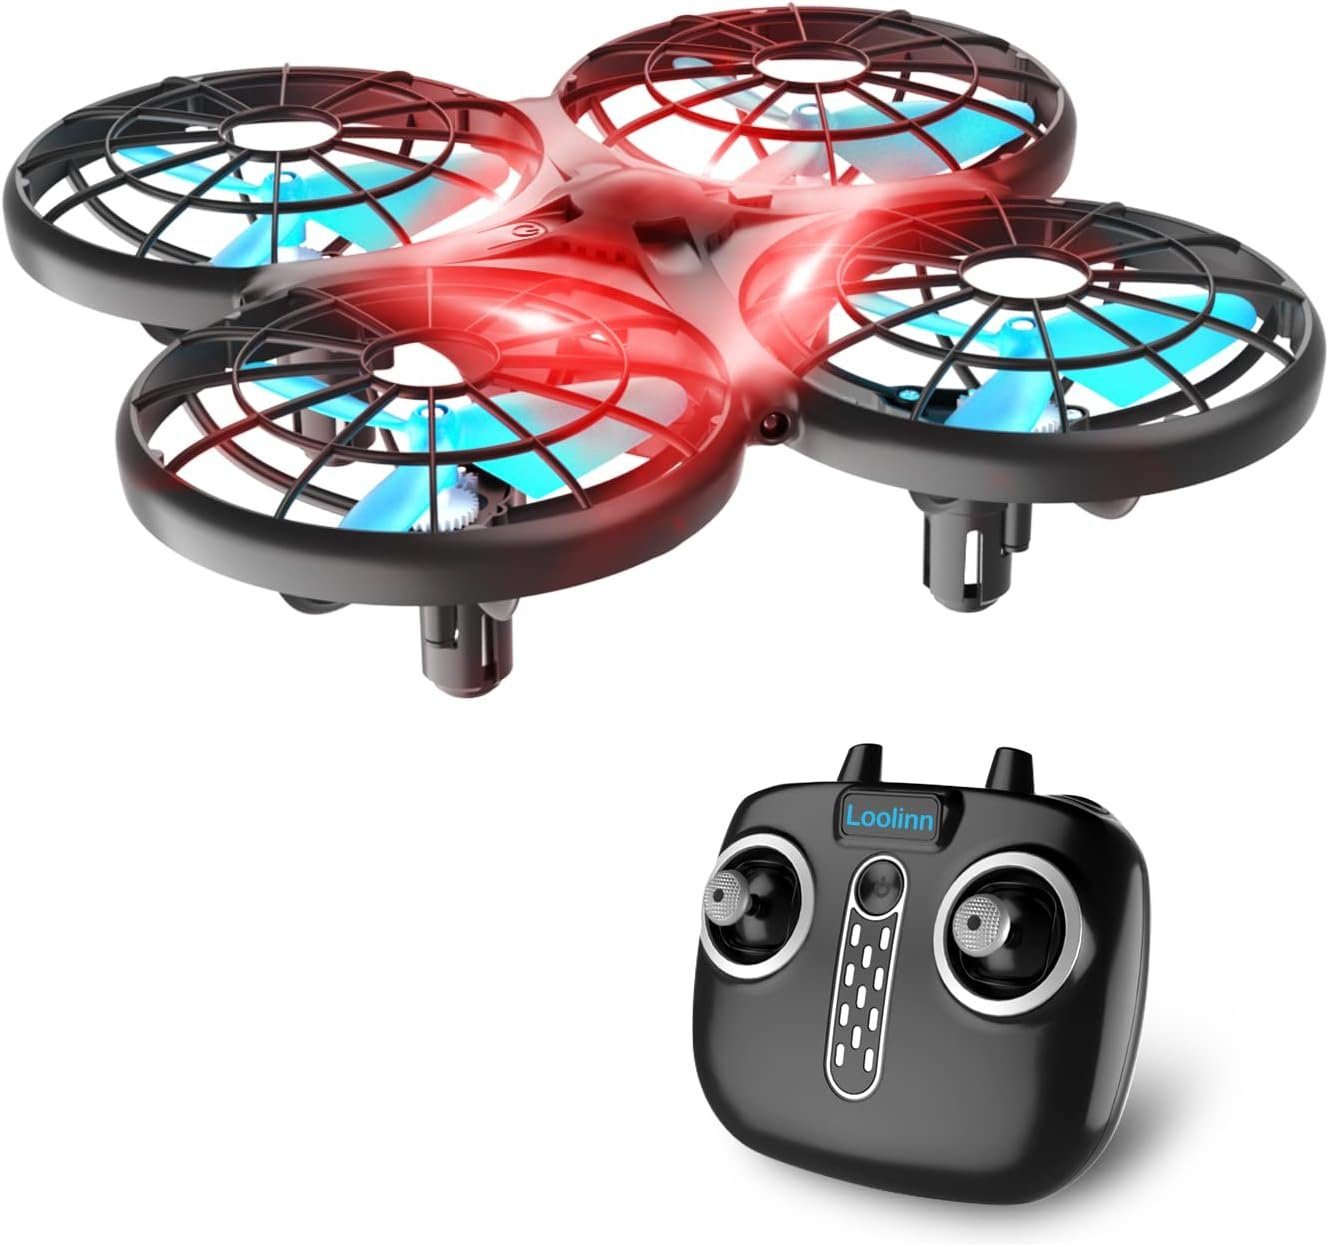 Flips Quadrocopter Drohne 360° RC Kinder Geschenk Antikollision) Loolinn (Mini